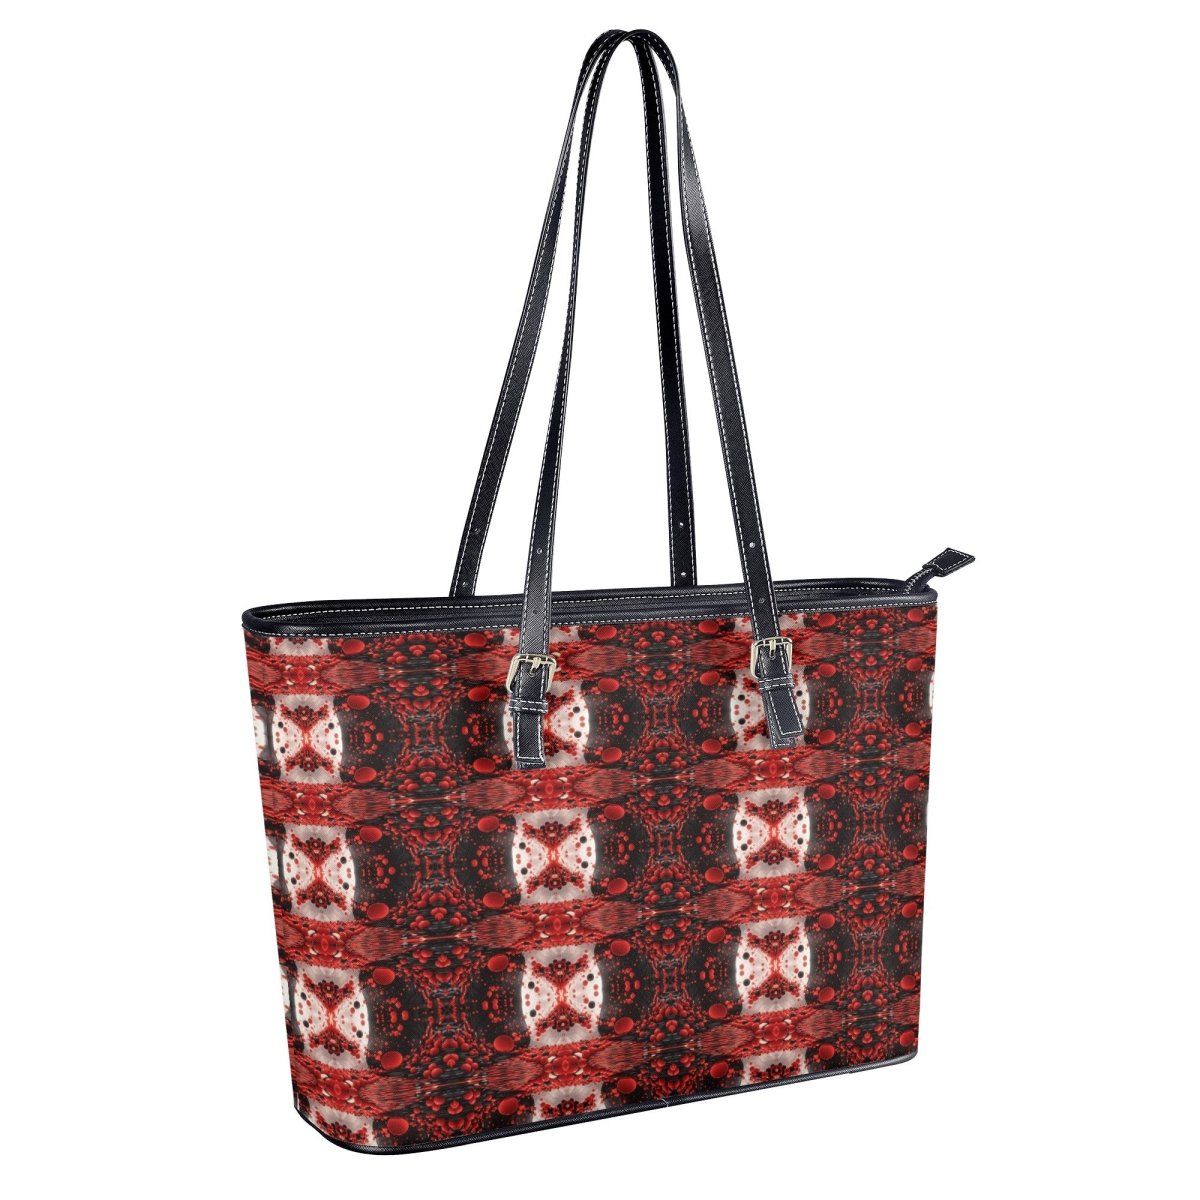 Fashion Red, Black and White Tote Bag - Iron Phoenix GHG